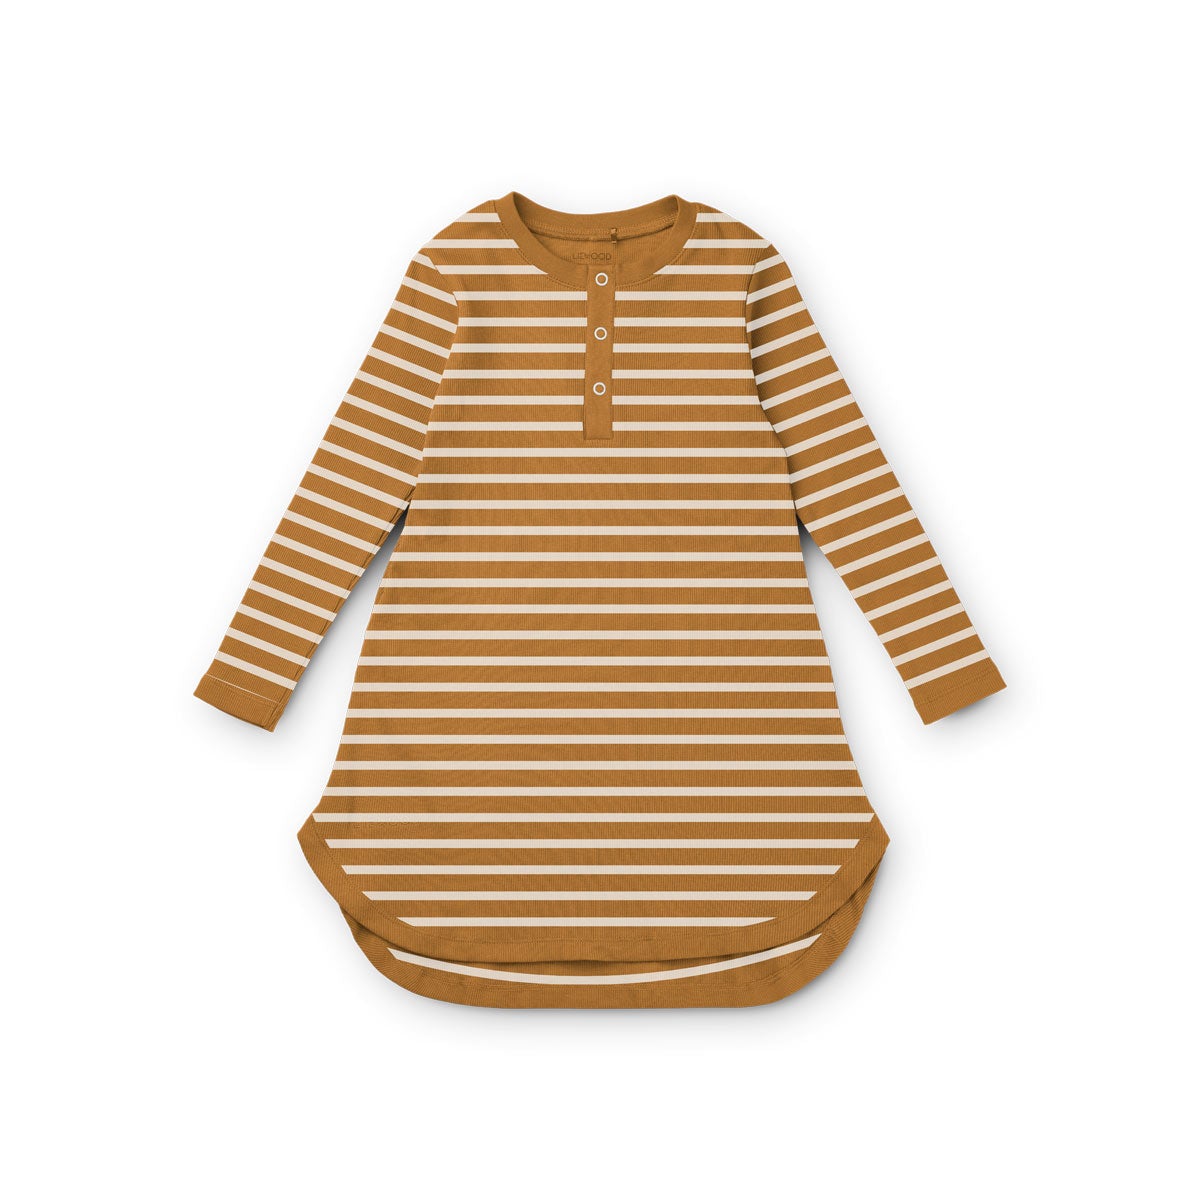 Alva Nightgown - Y/D Stripe: Golden caramel / Sandy